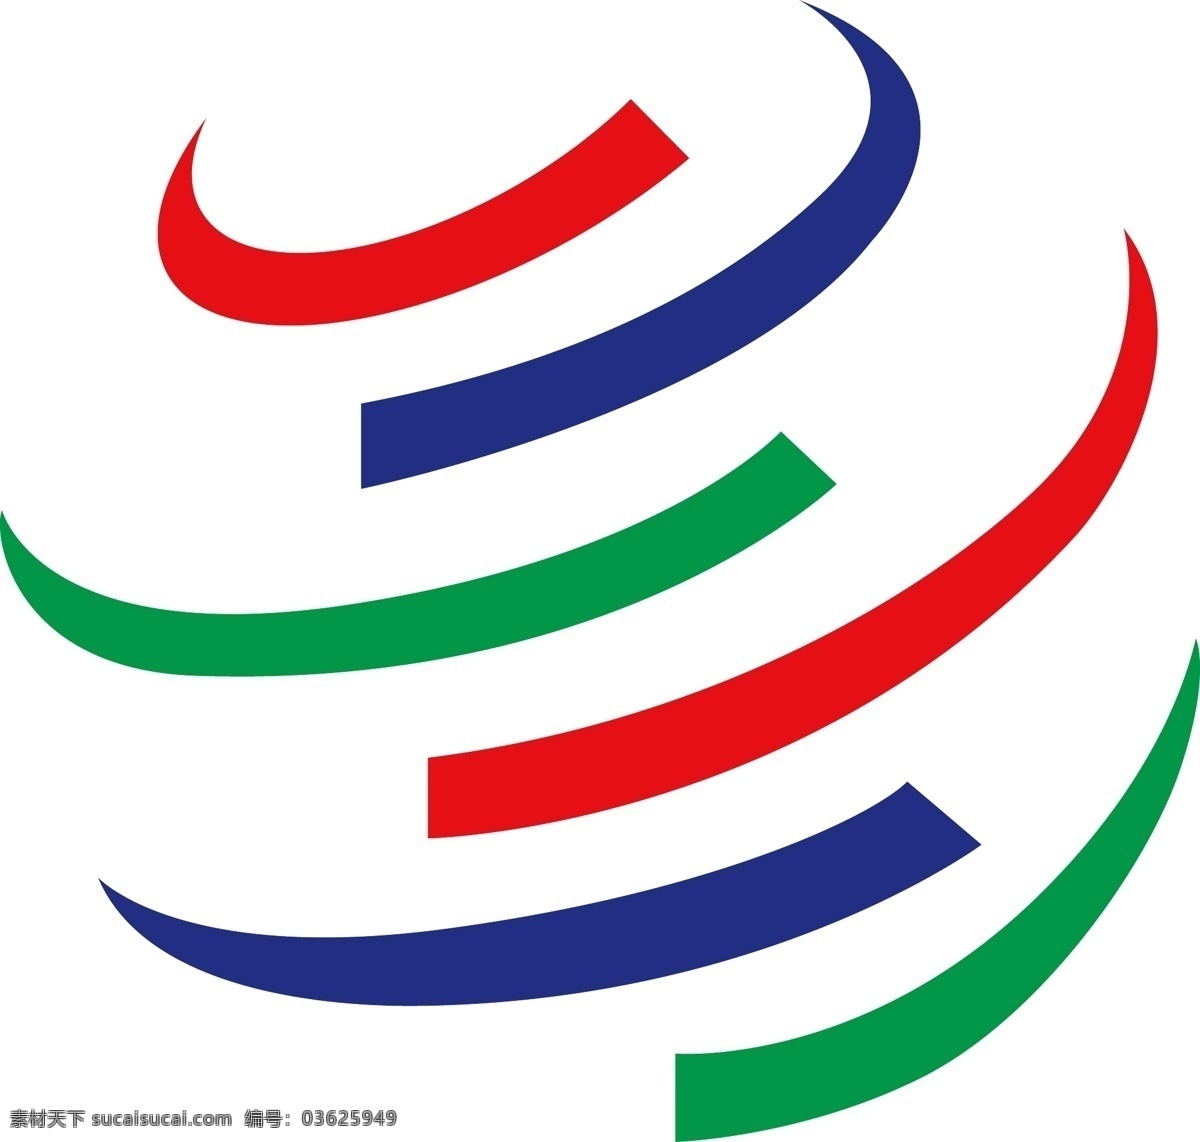 wto logo 世界贸易组织 世贸组织 入世 经济 关税 标识标志图标 矢量